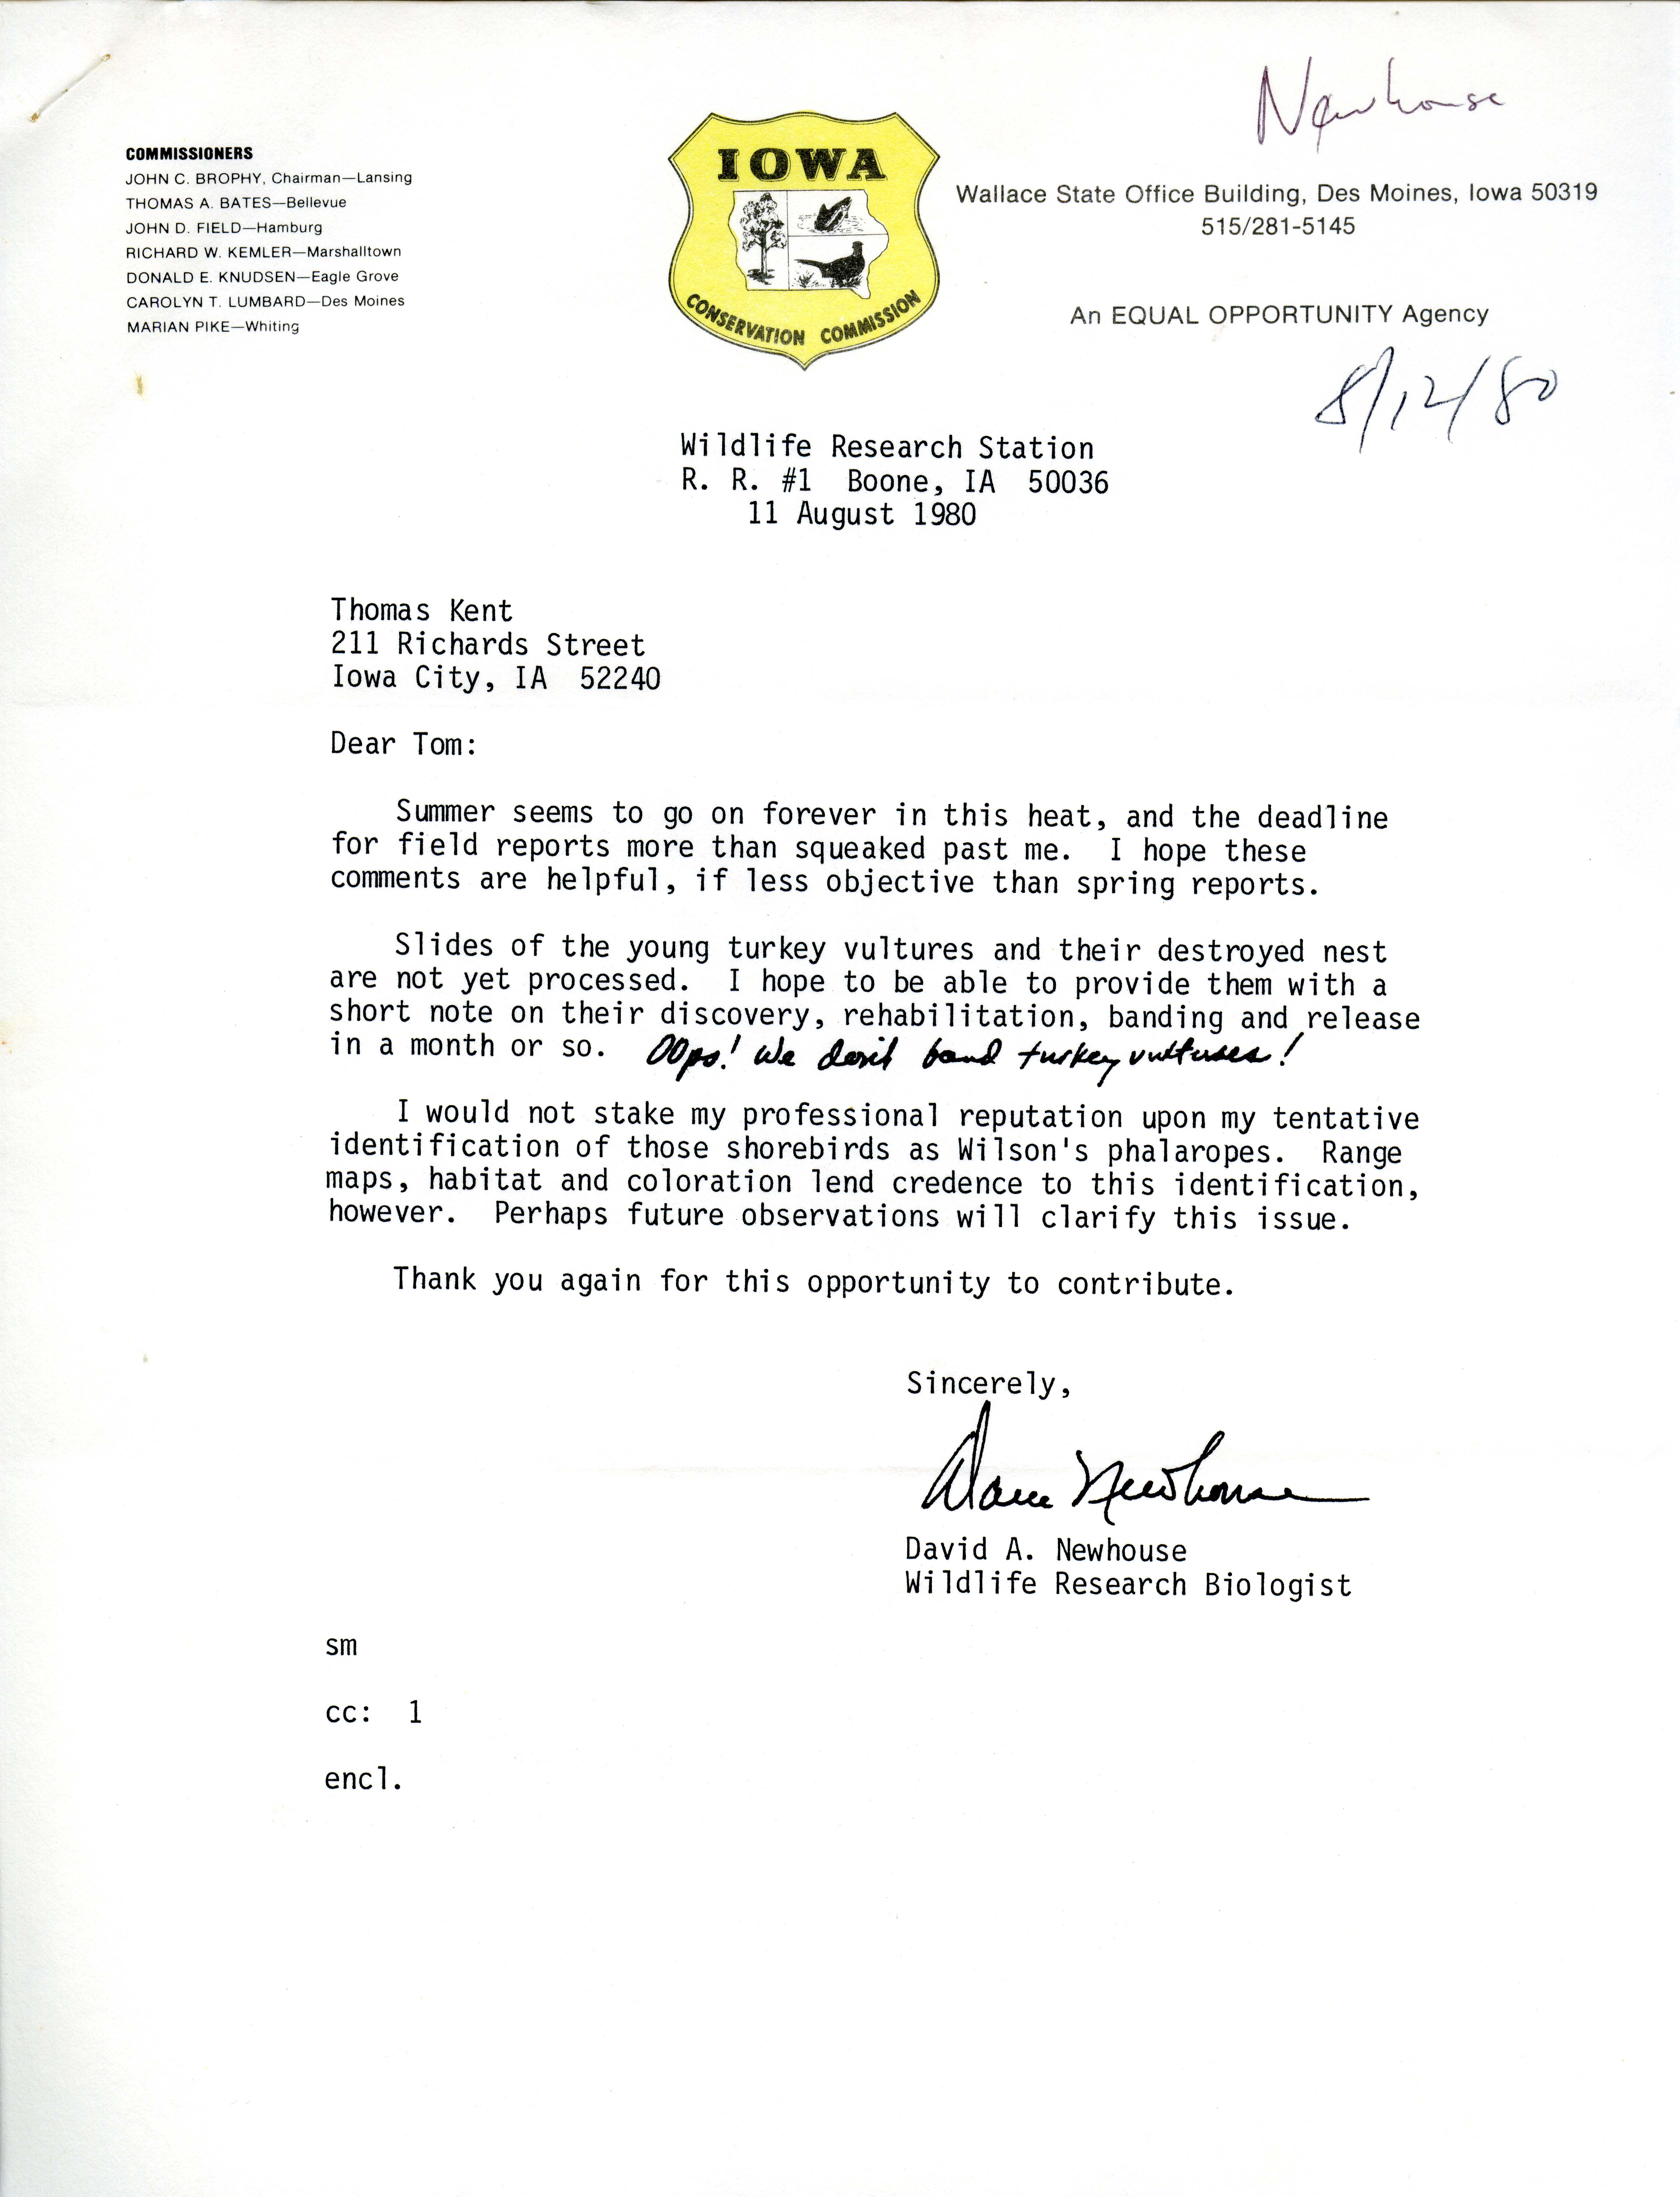 David A. Newhouse letter to Thomas H. Kent regarding bird sightings, August 11, 1980